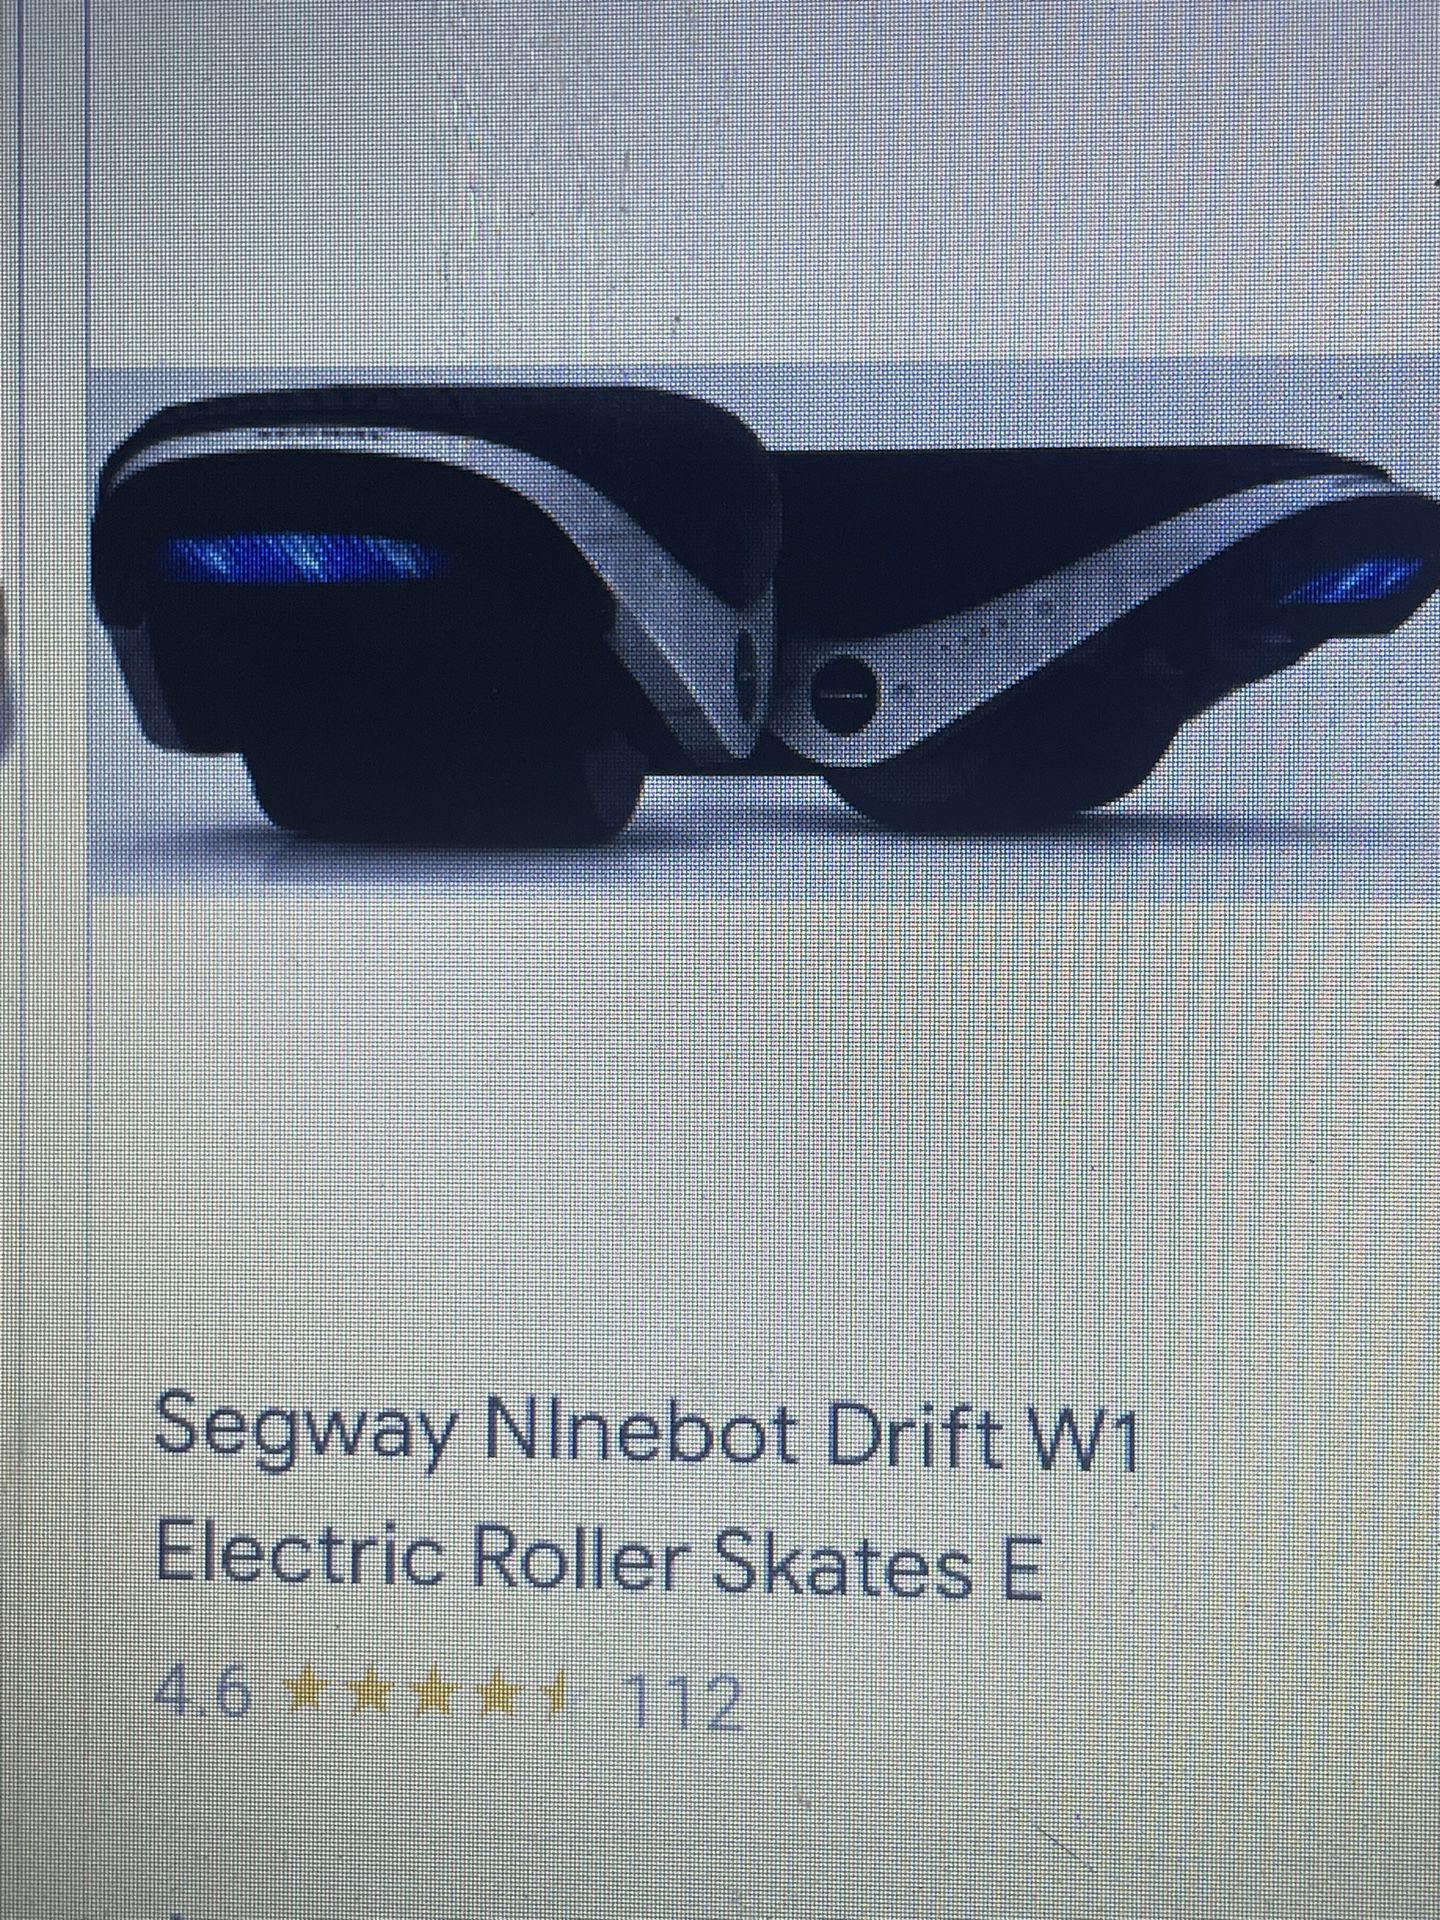 Segway Drift W1 Electric Skates  New